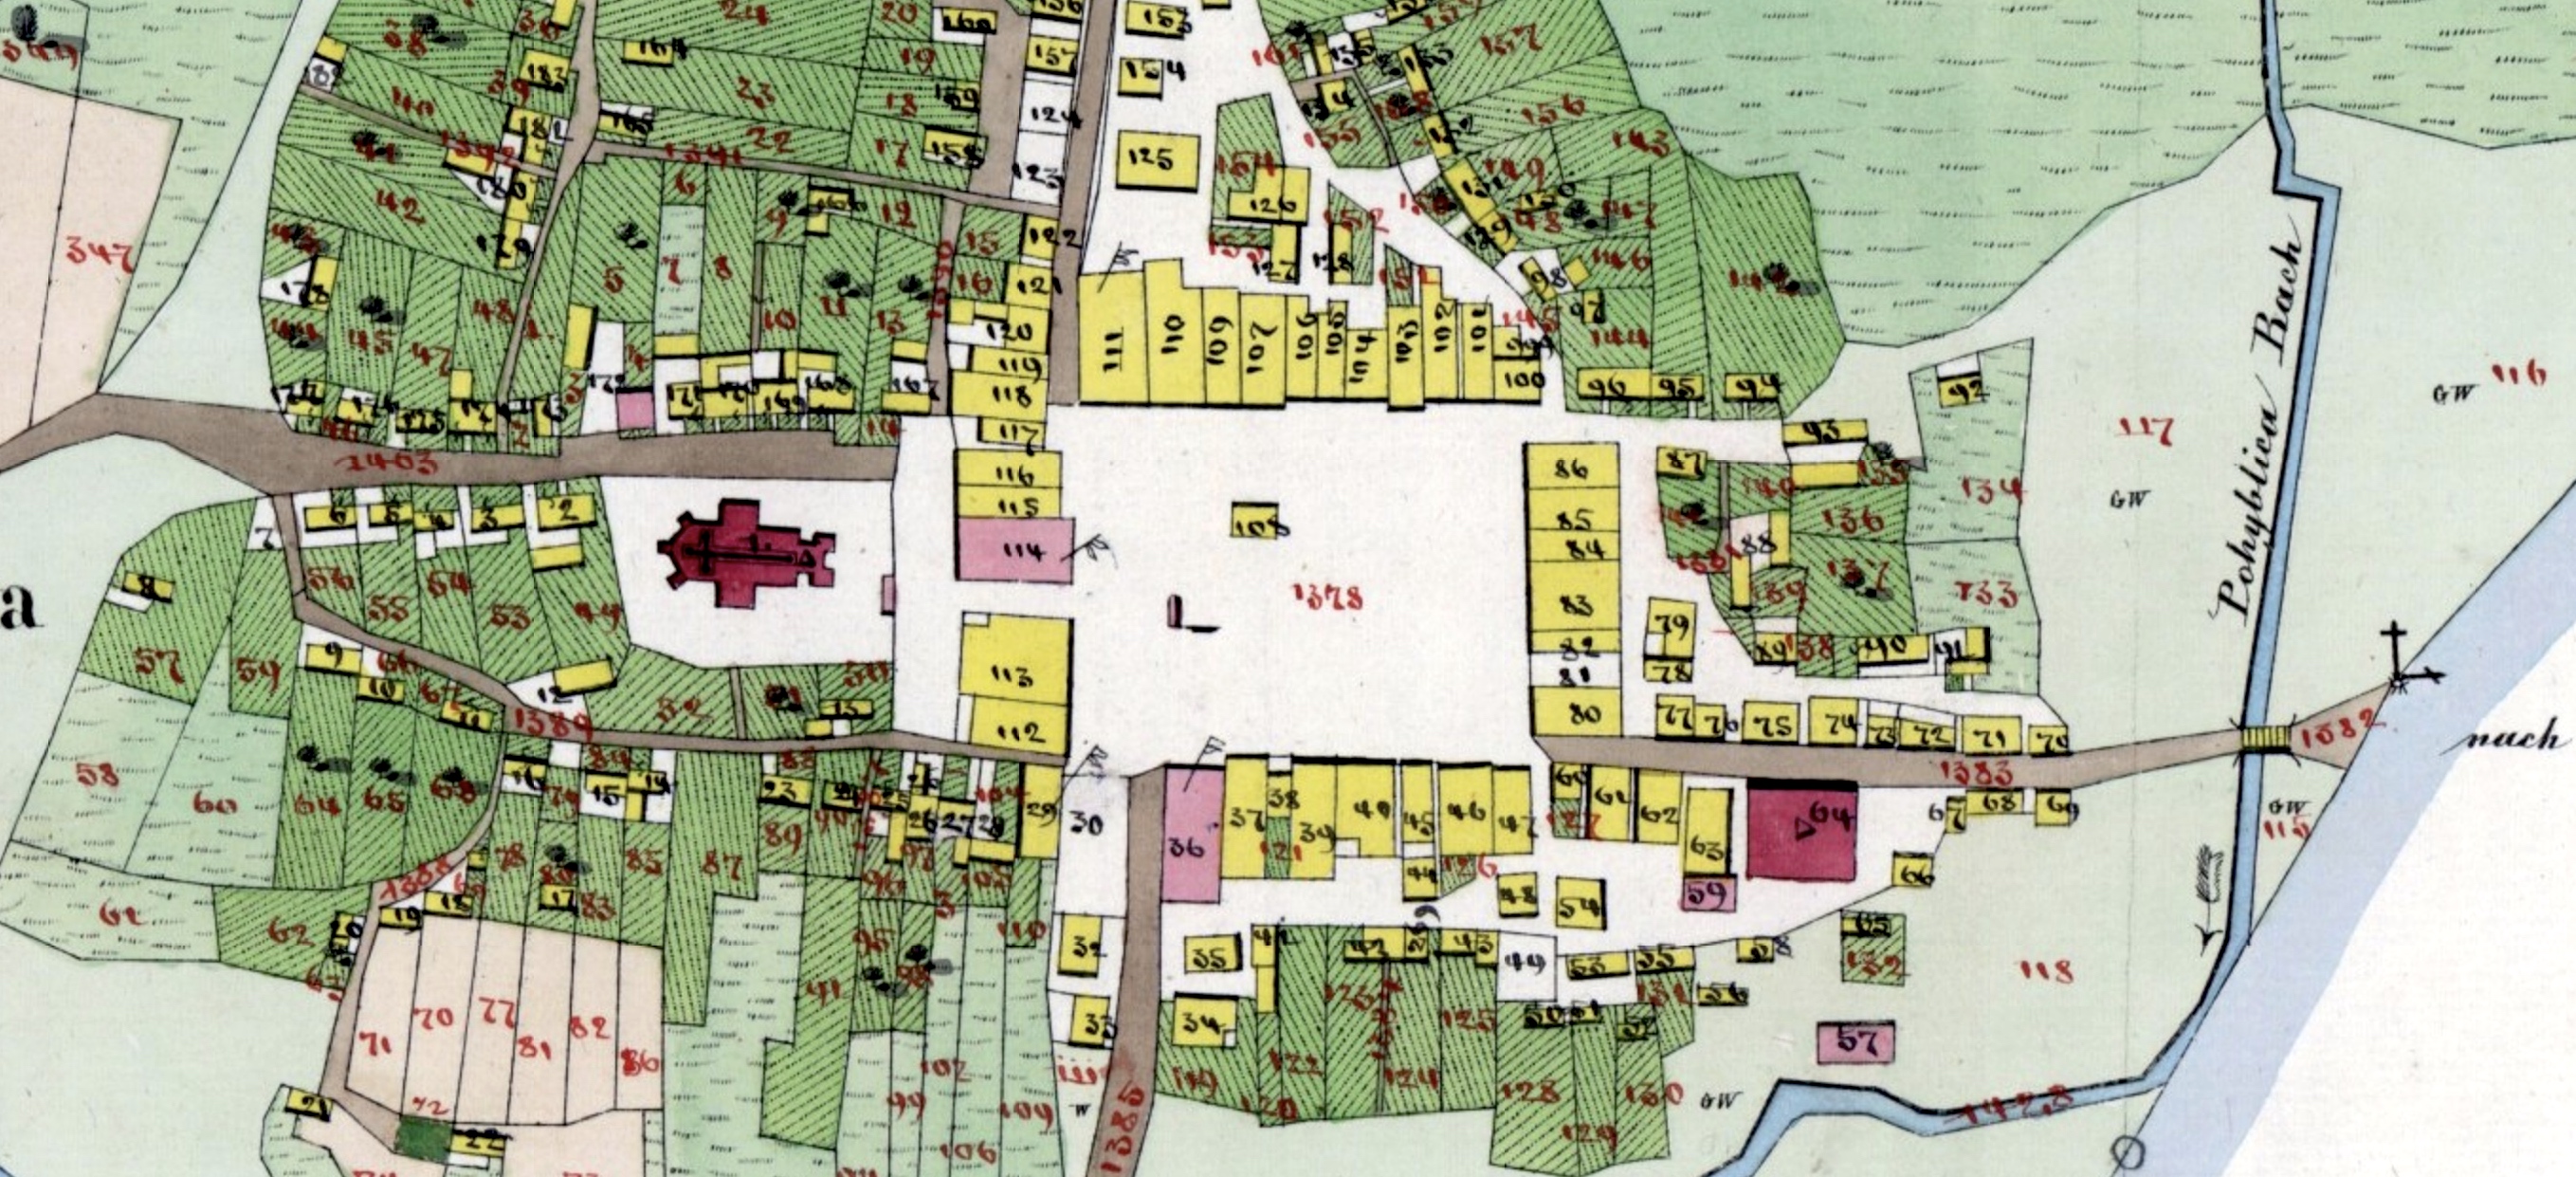 the 1854 cadastral map of Narol